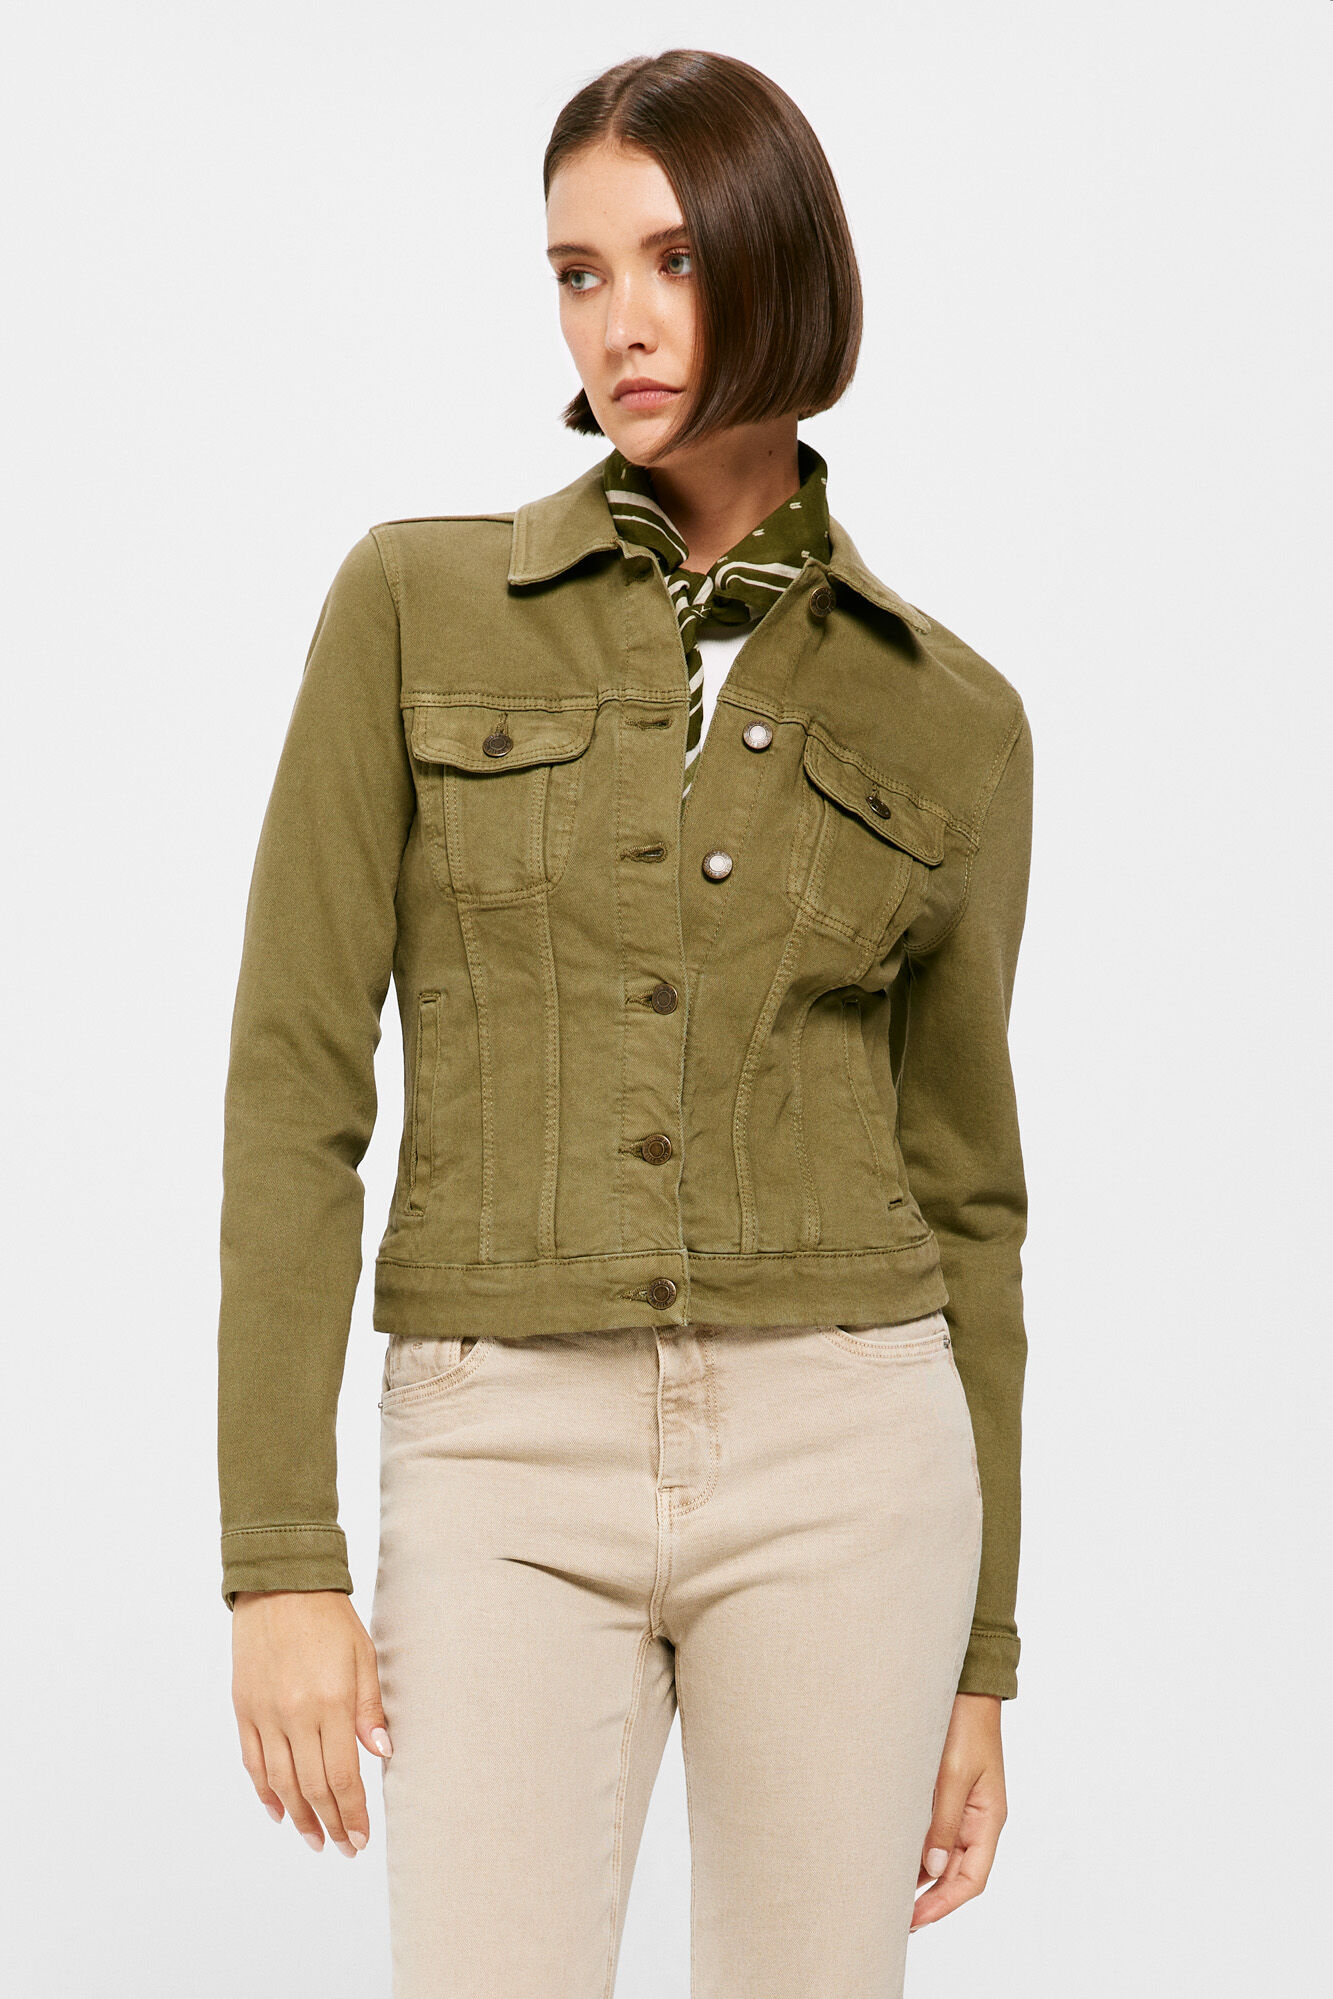 Ladies RFD colour denim jacket | Denim jacket women, Jackets, Denim jacket